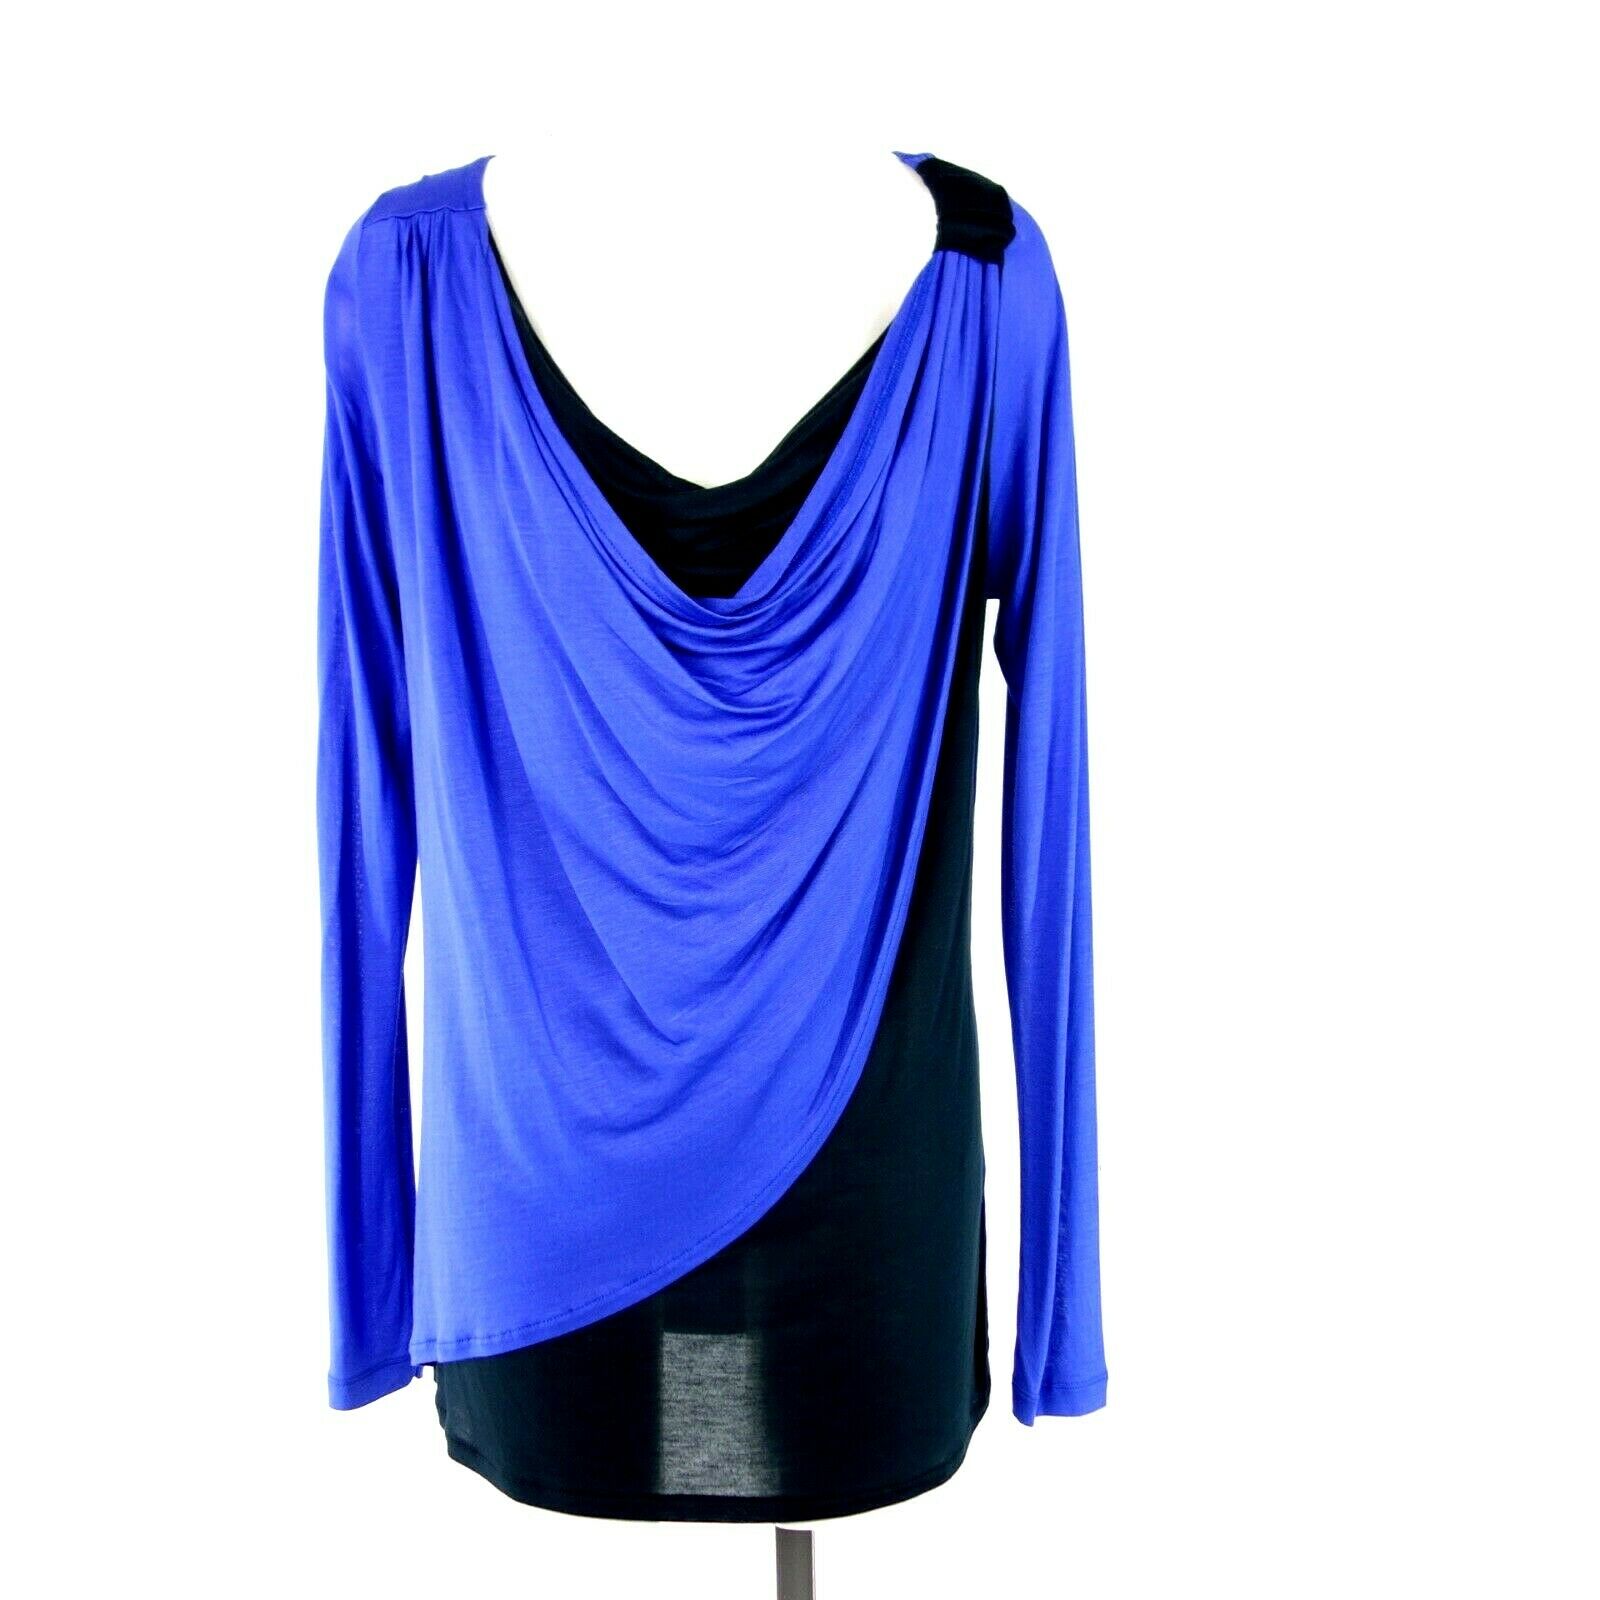 EXPRESSO Damen Shirt T-Shirt Tunika Oberteil Blau Schwarz Arcia Viskose M 38 Neu